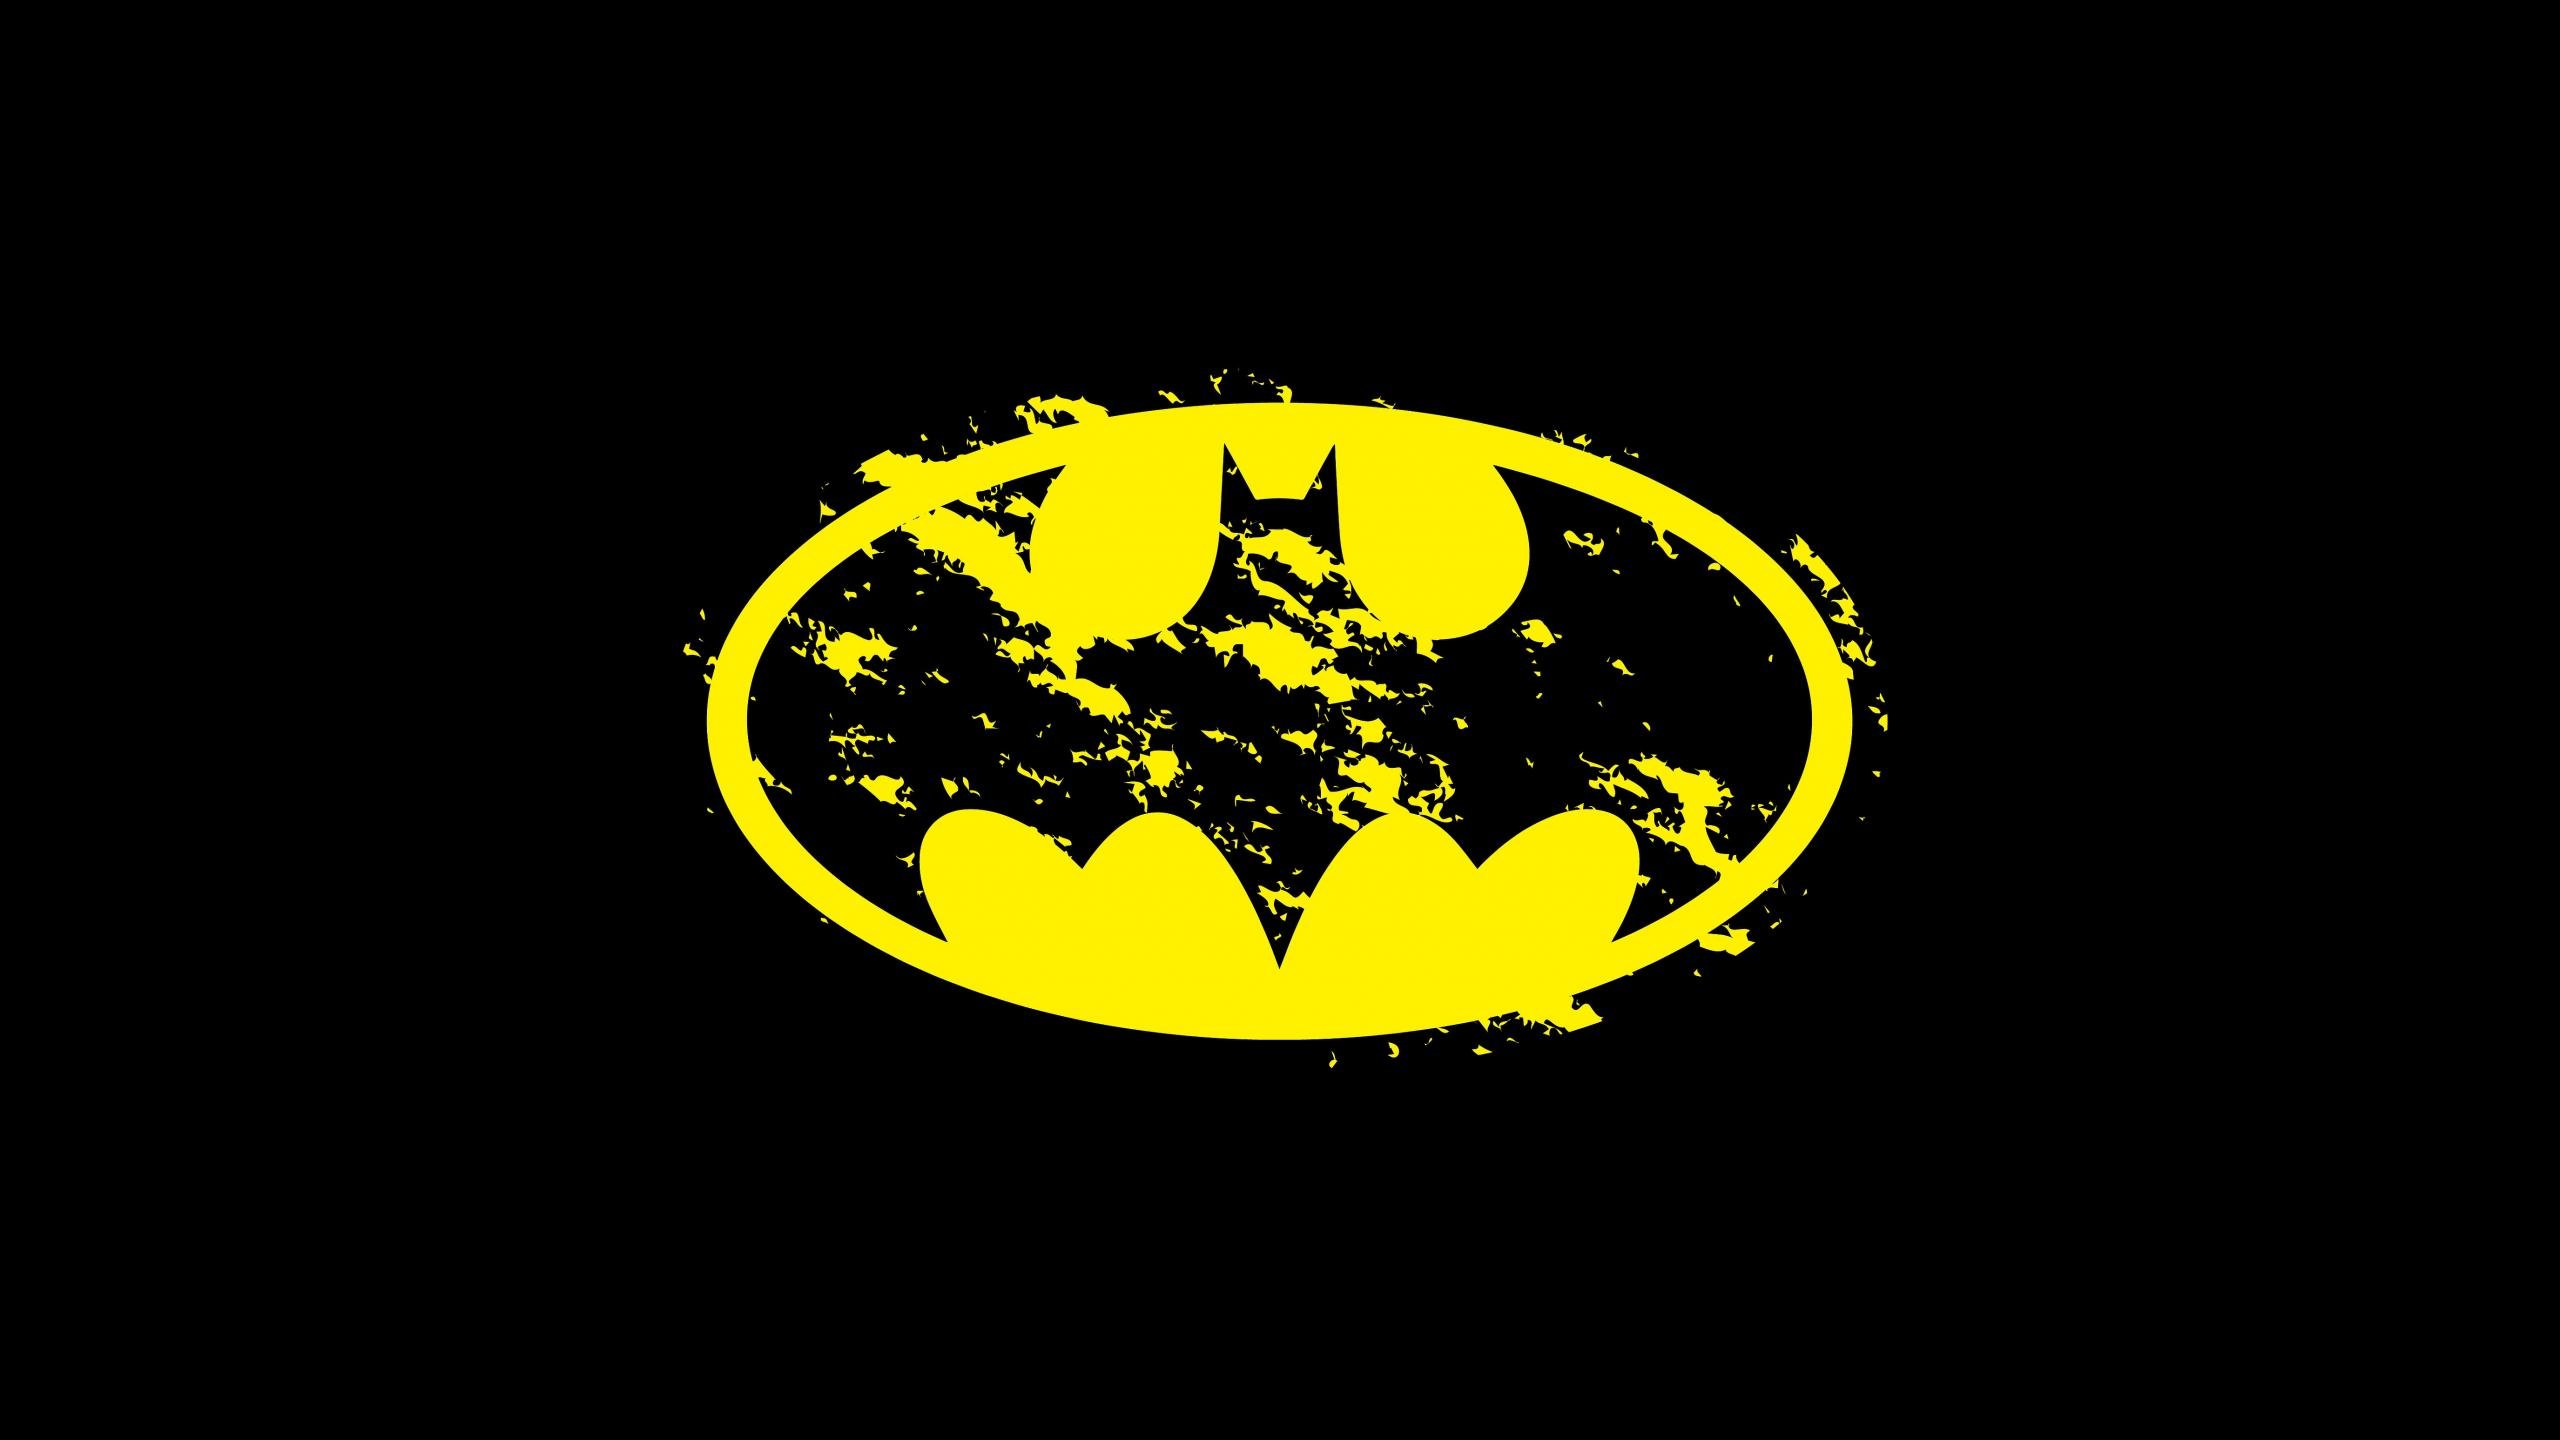 Best Batman Logo (Symbol) background ID:41751 for High Resolution hd 2560x1440 desktop